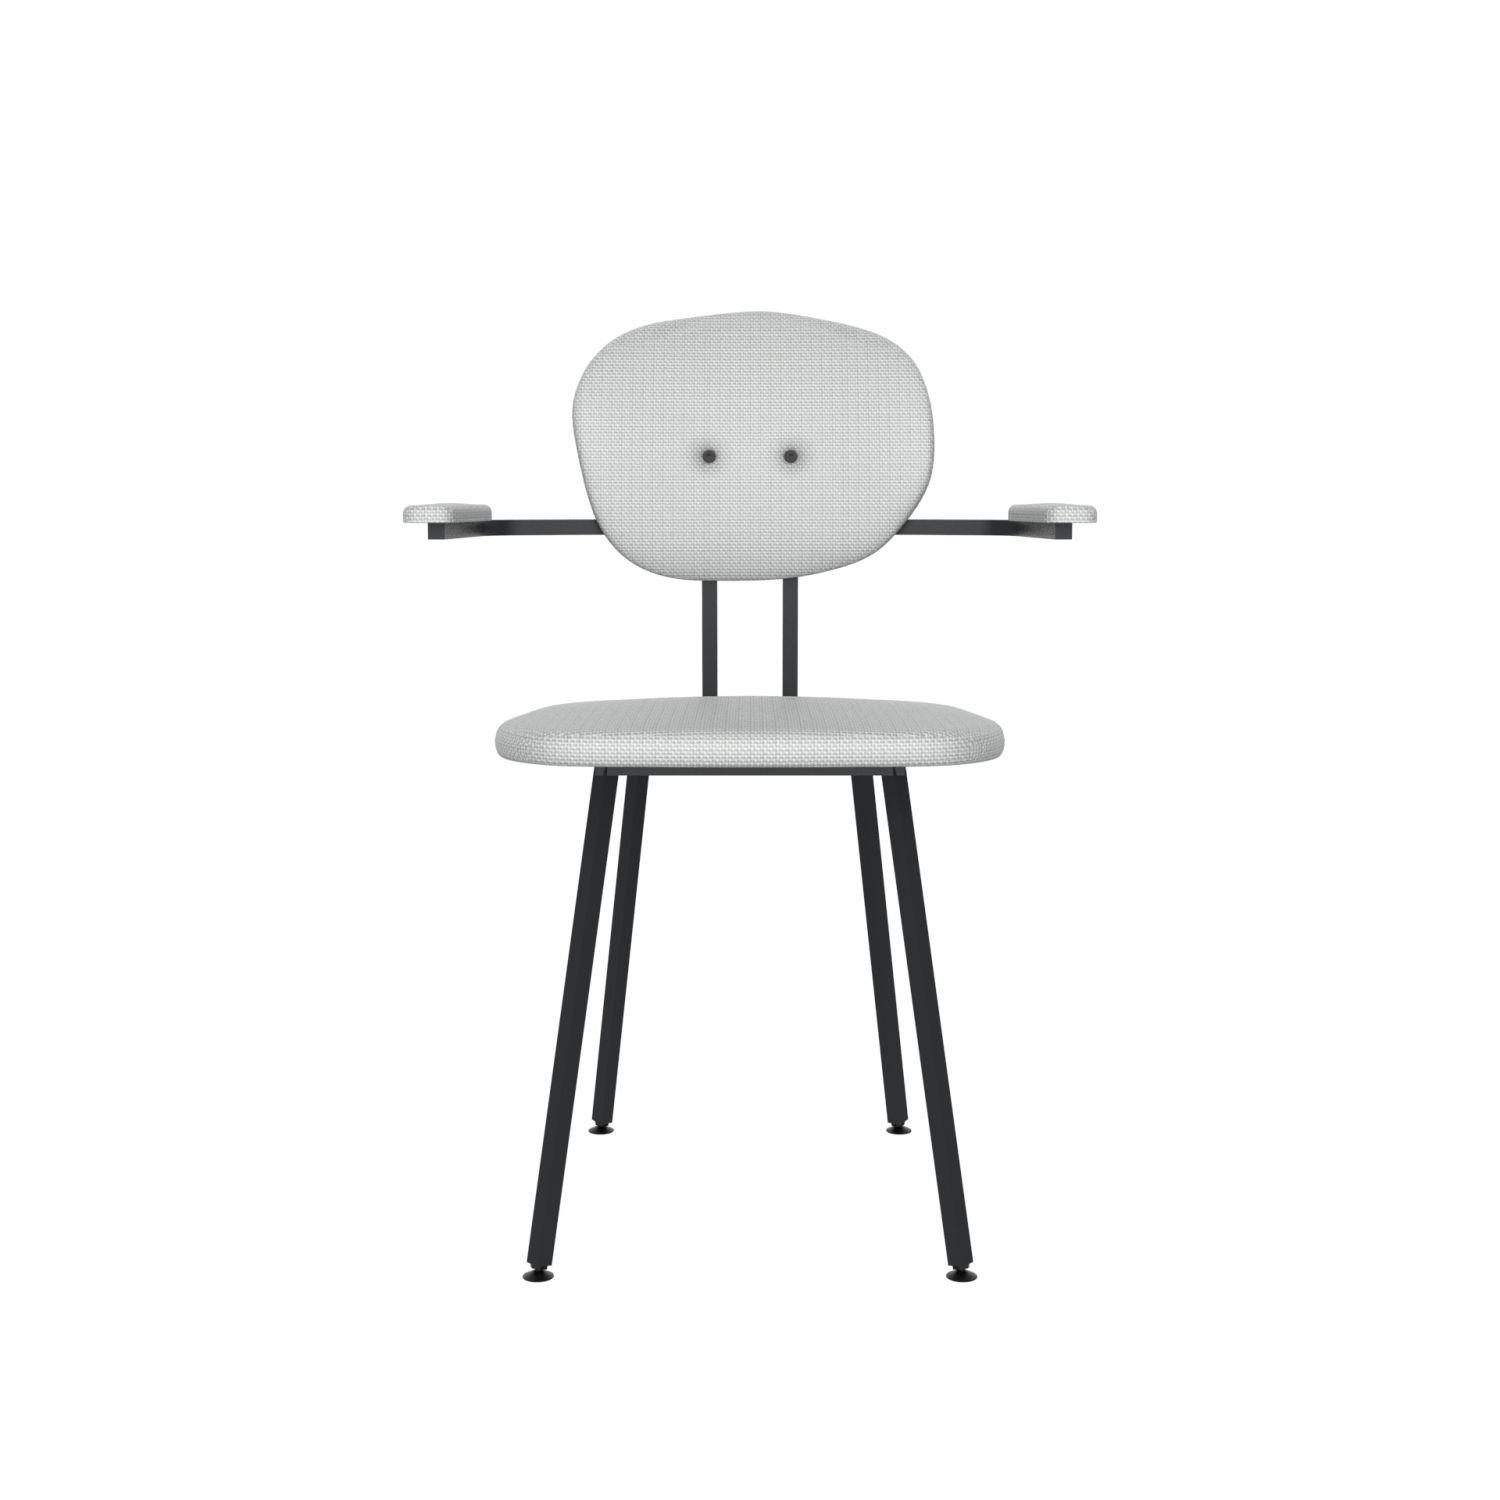 lensvelt maarten baas chair 102 not stackable with armrests backrest a breeze light grey 171 black ral9005 hard leg ends